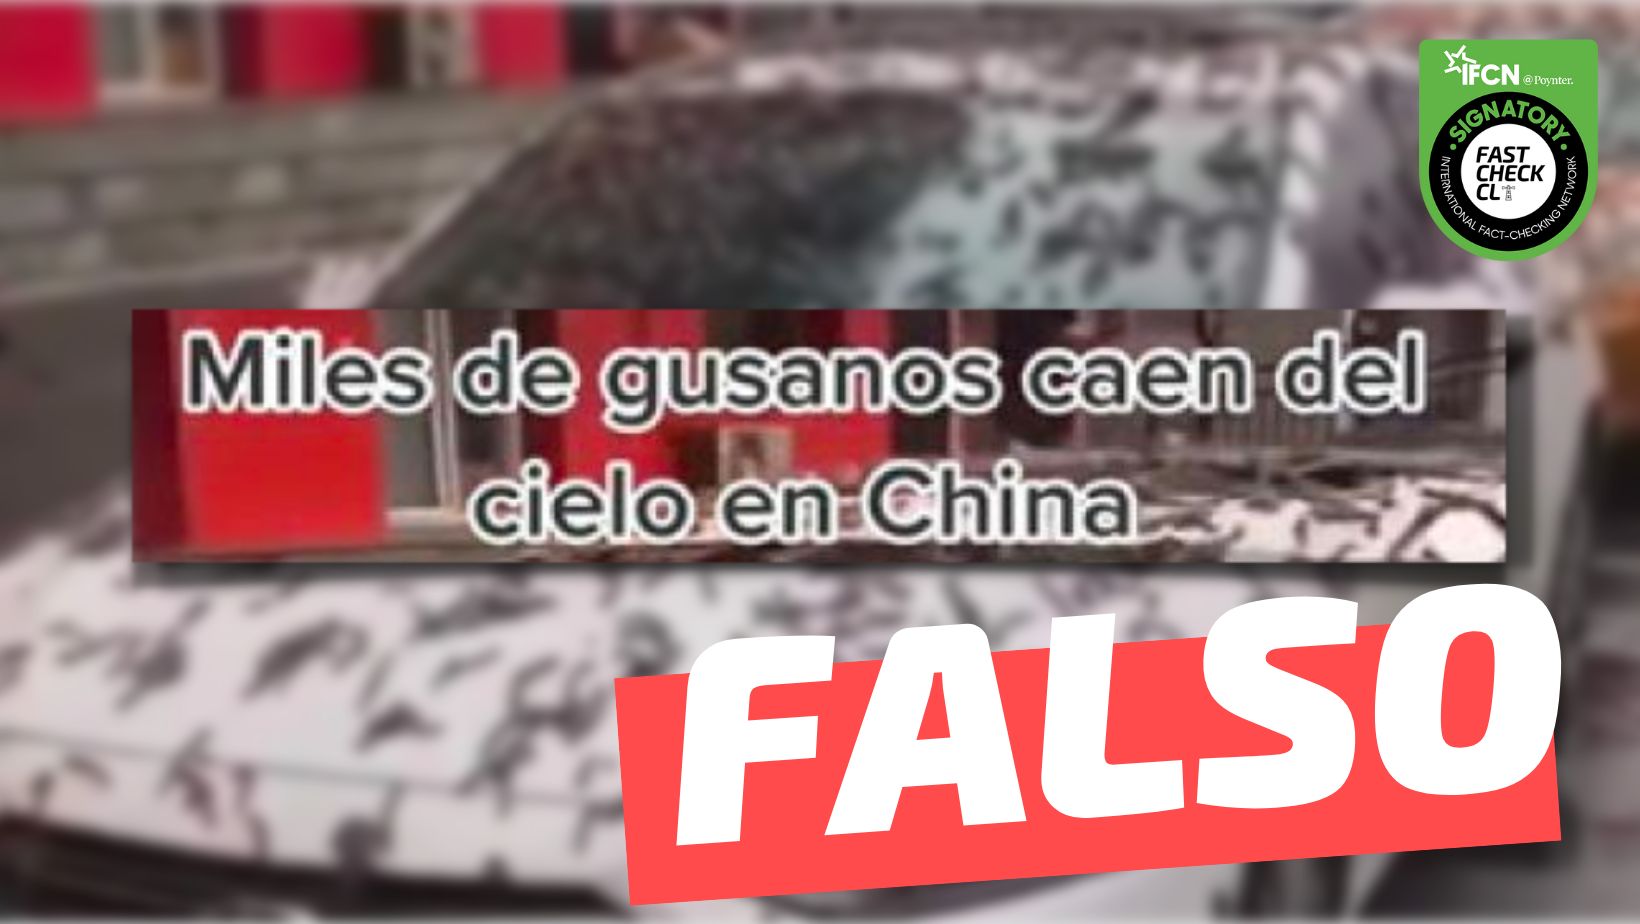 You are currently viewing (Video) “Lluvia de gusanos en China”: #Falso